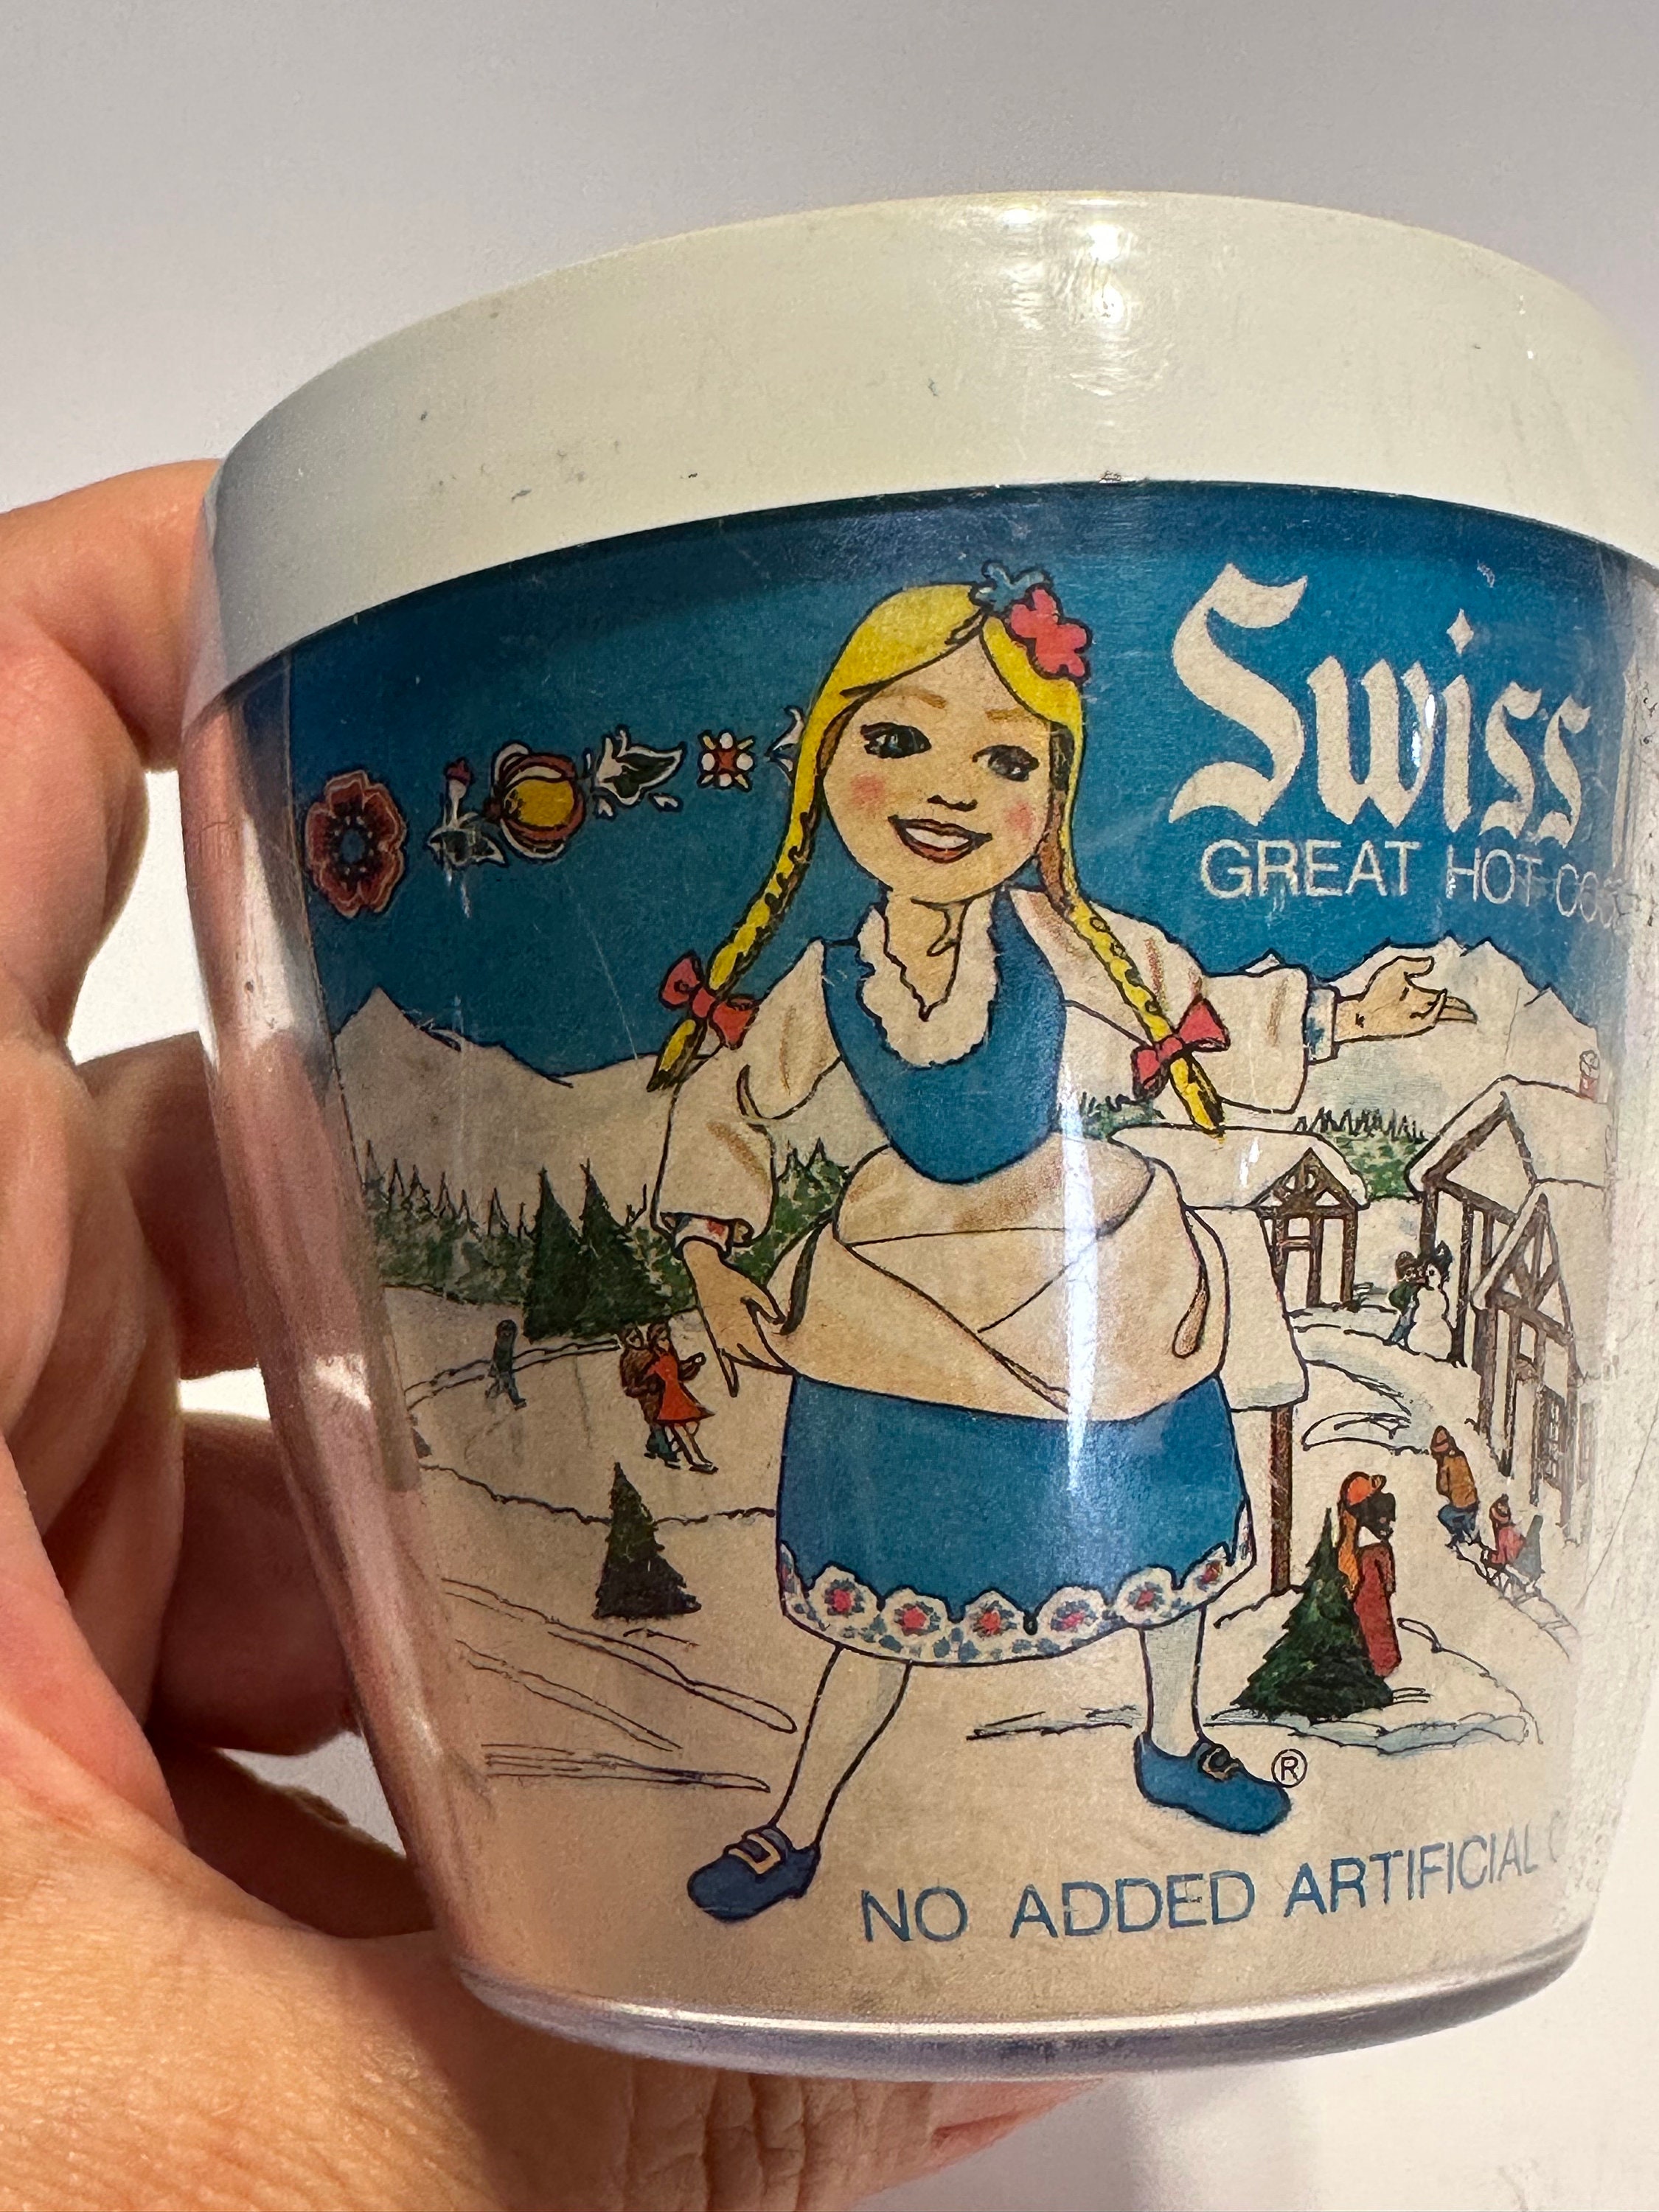 Swiss Miss chocolate milk maker print ad 1978 vintage 1970s retro food art  girl